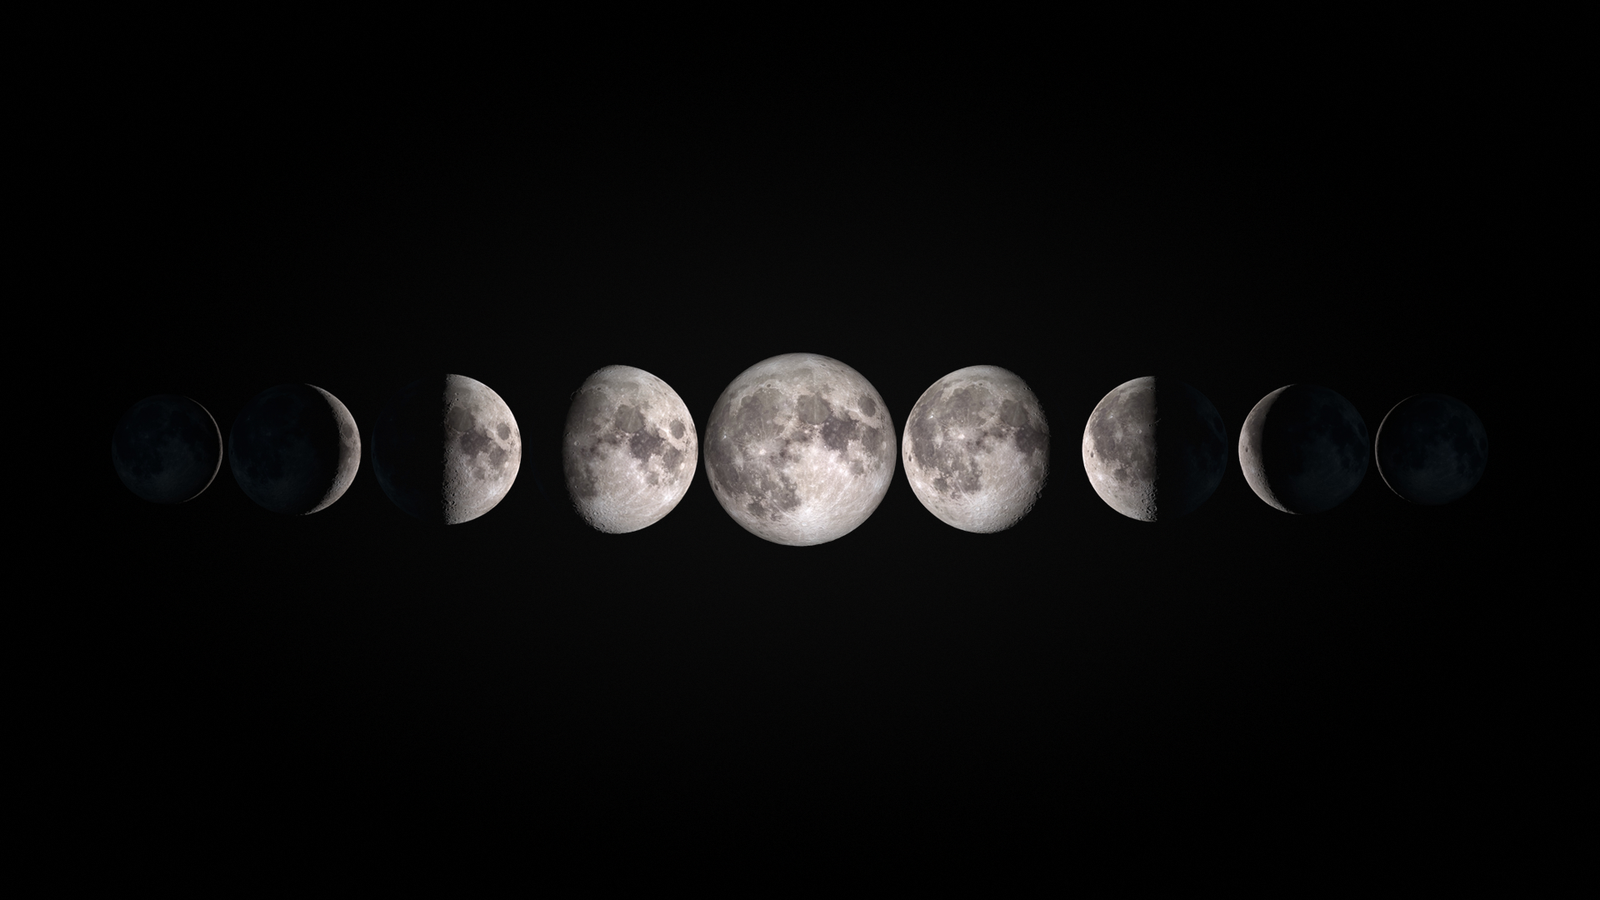 Best 36+ Moon Phases Desktop Backgrounds on HipWallpapers.